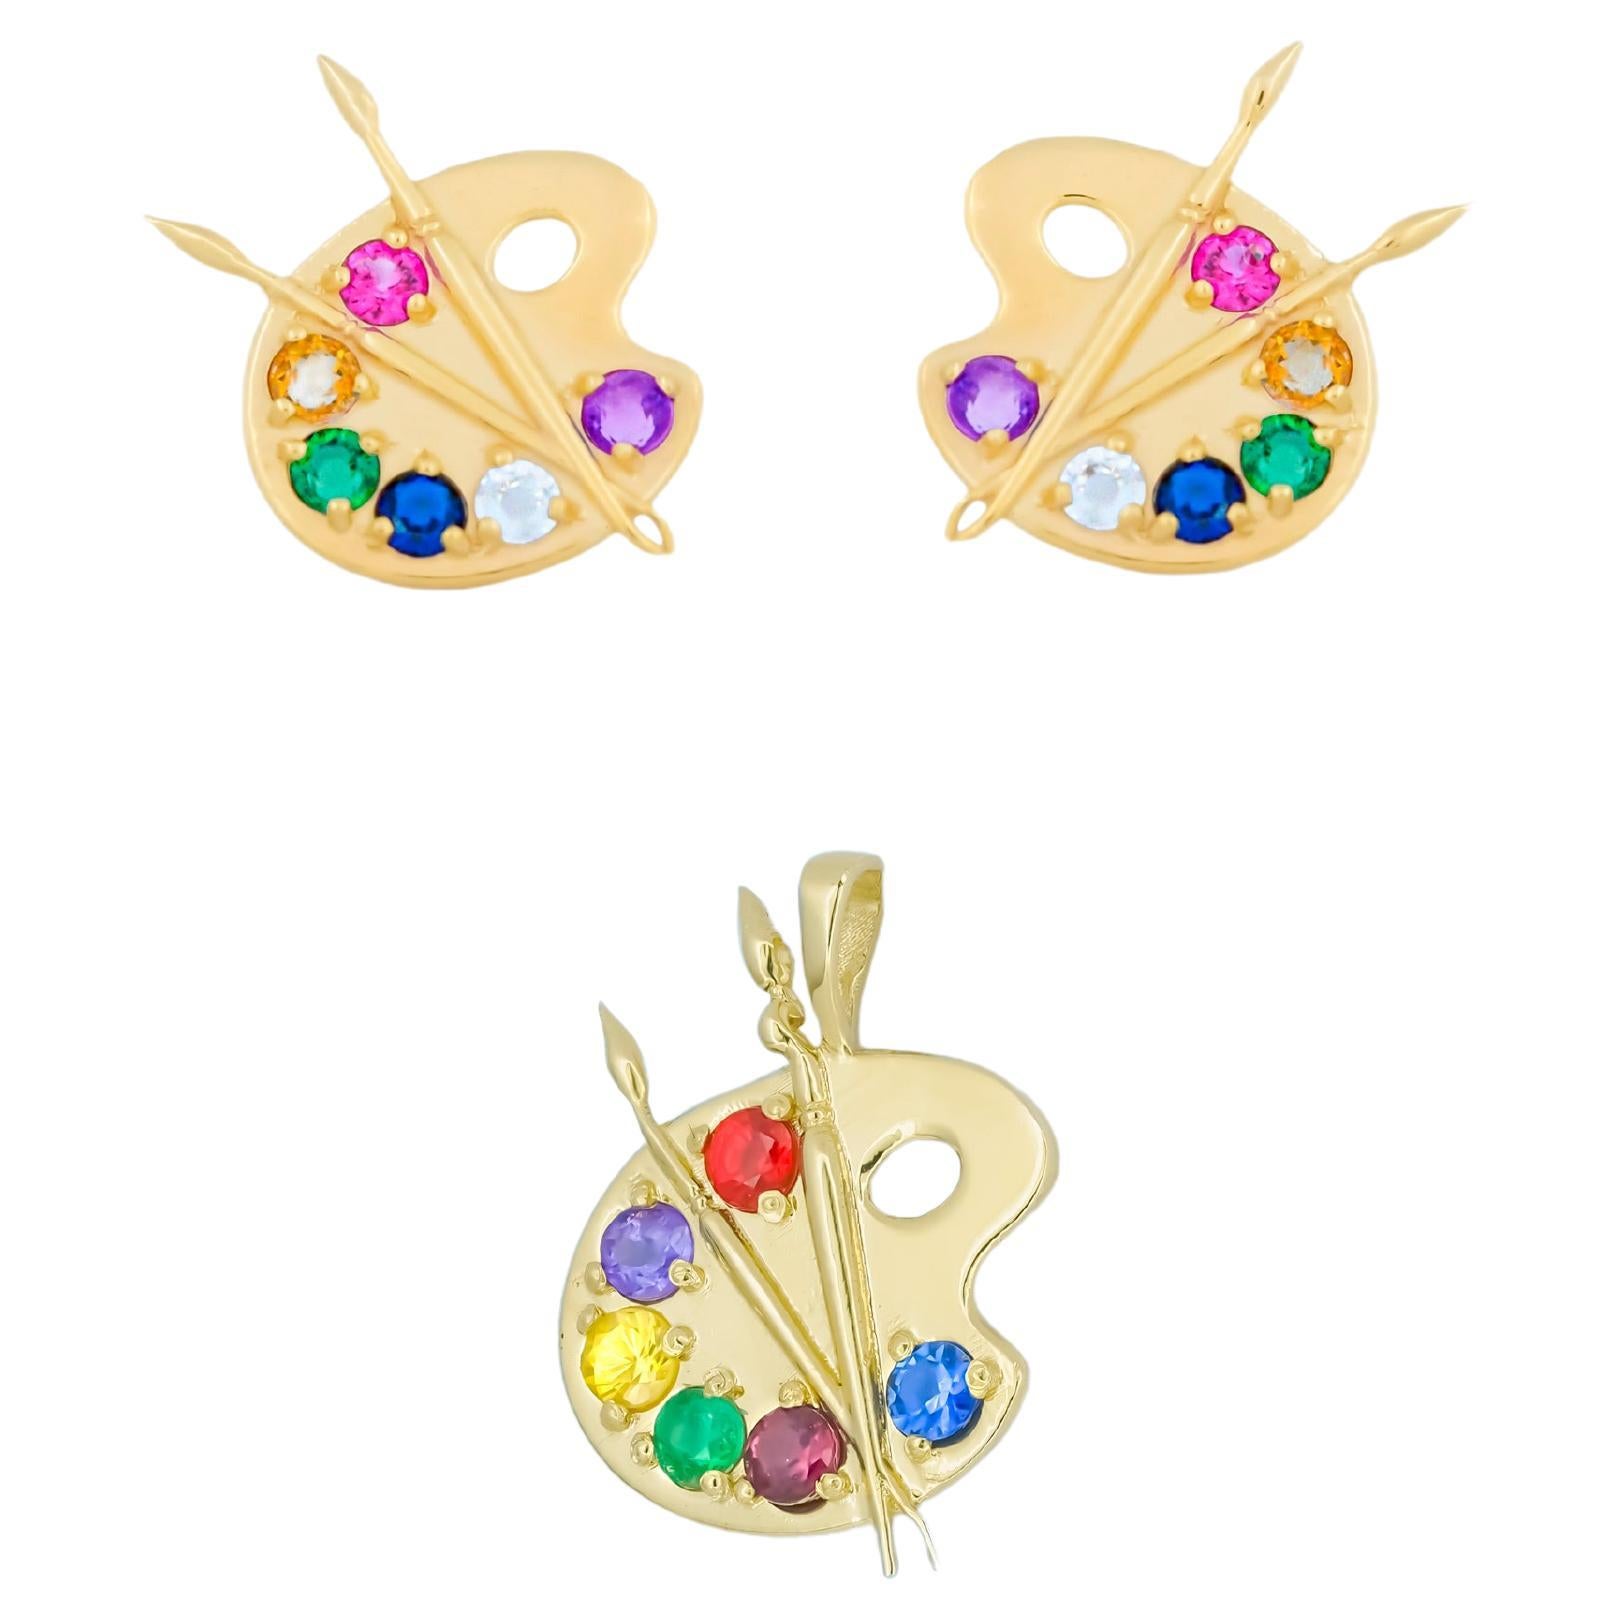 Artist Palette set: earrings and pendant in 14k gold. For Sale